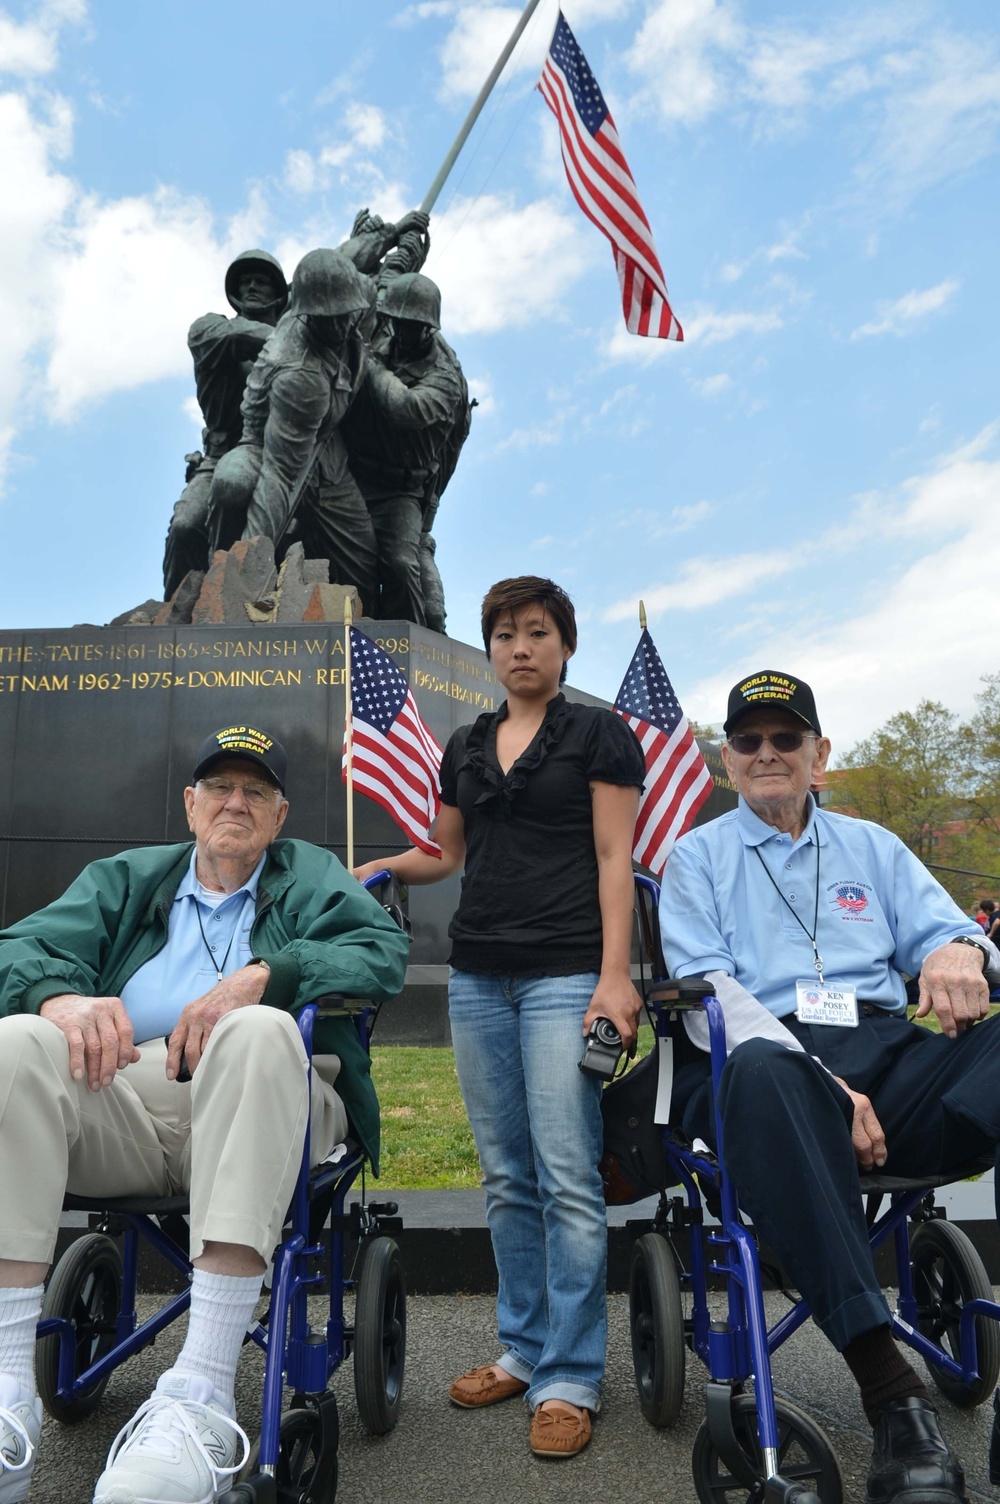 Texas veterans honored in Washington, D.C.